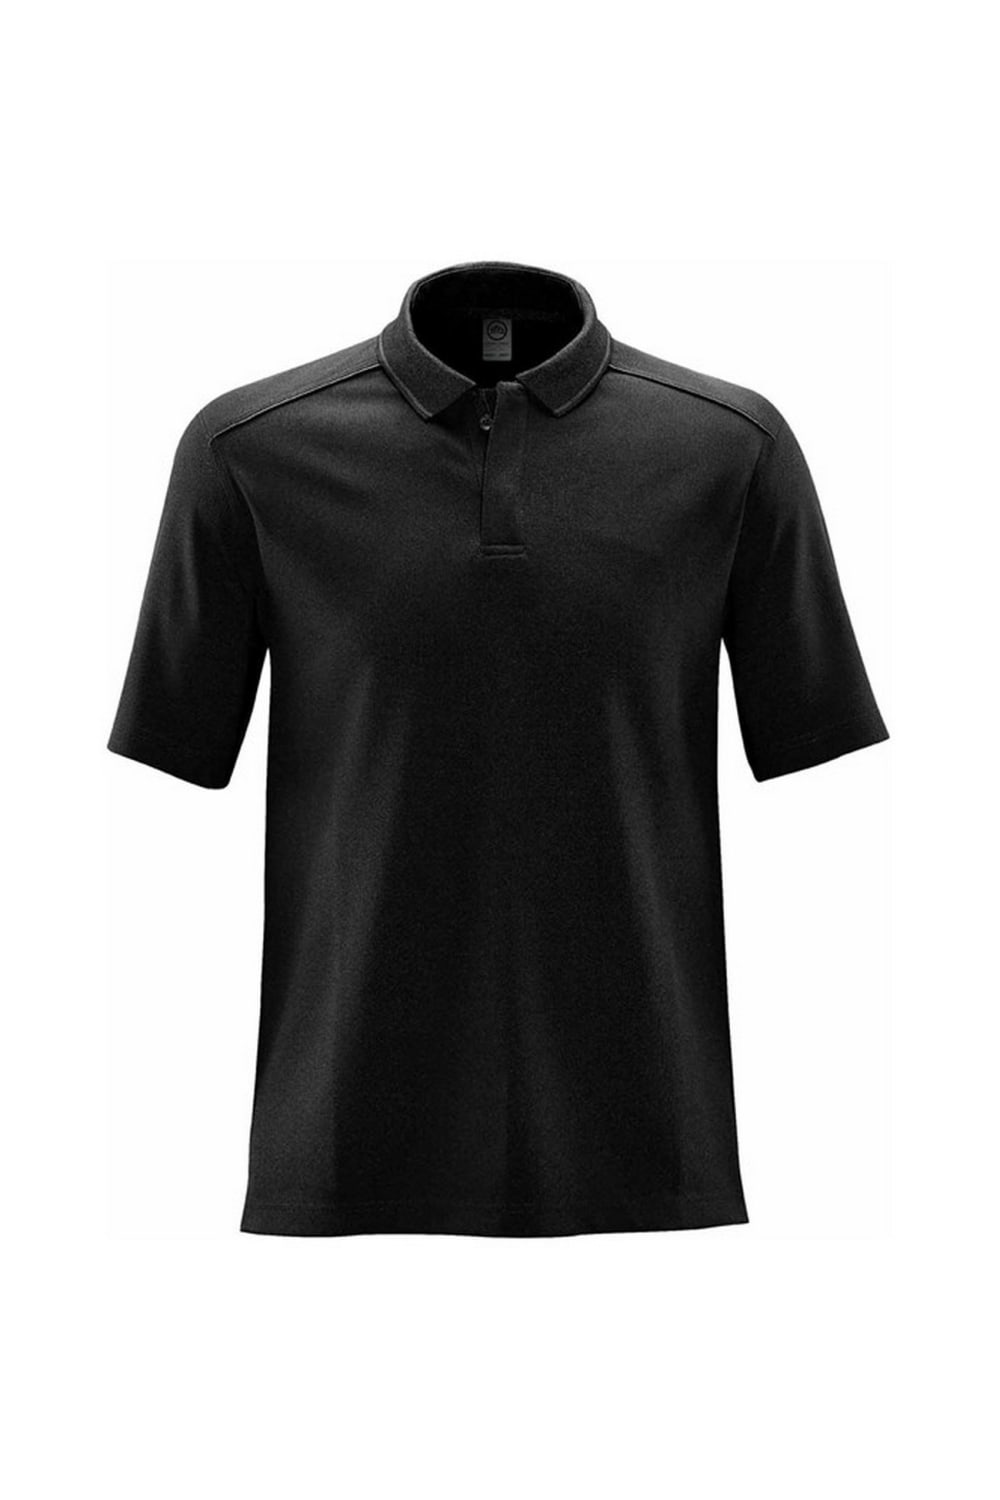 Stormtech Mens Endurance Polo Shirt (Black)